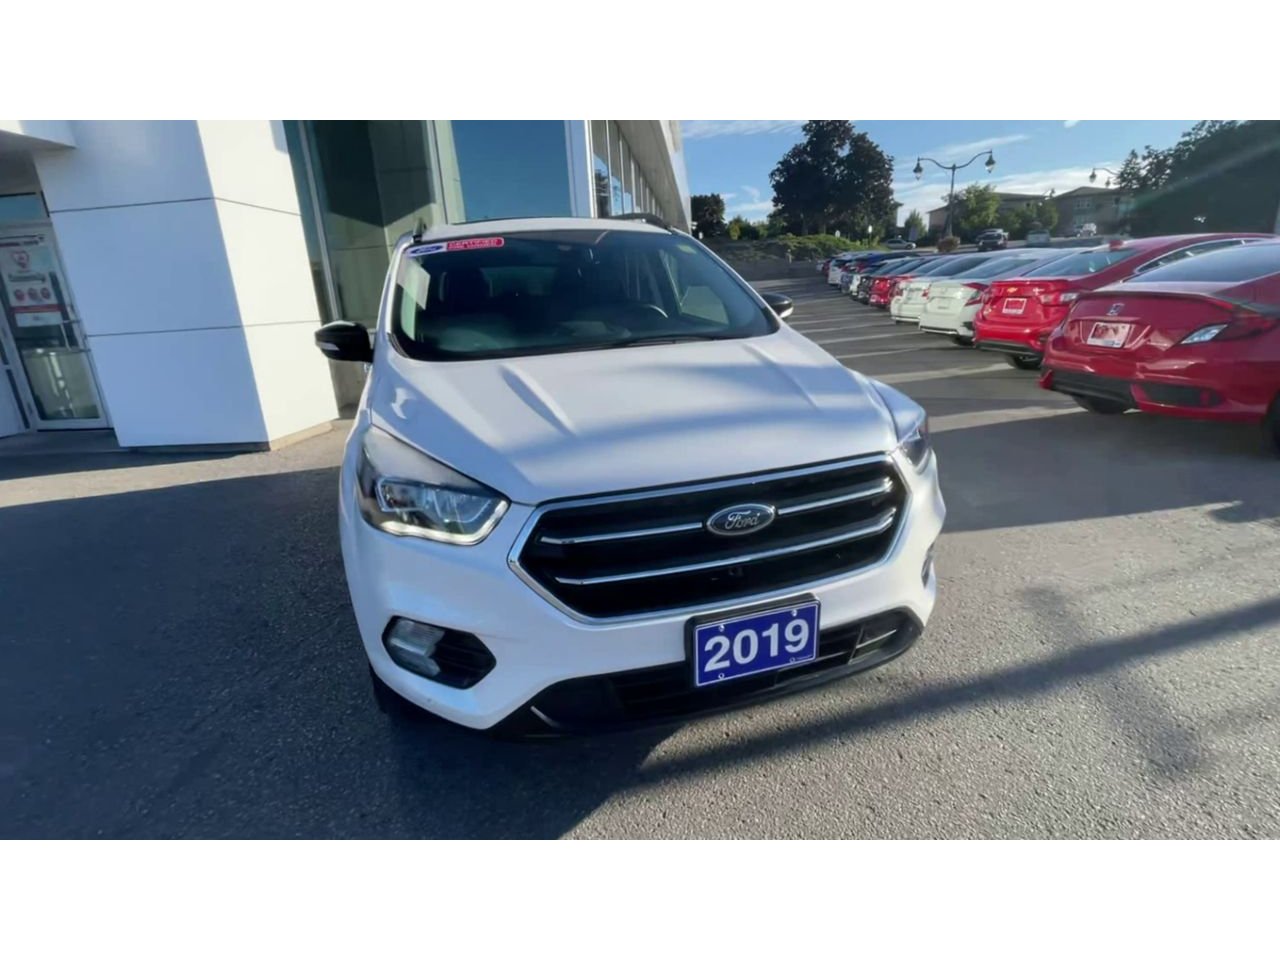 2019 Ford Escape - 21289A Full Image 3